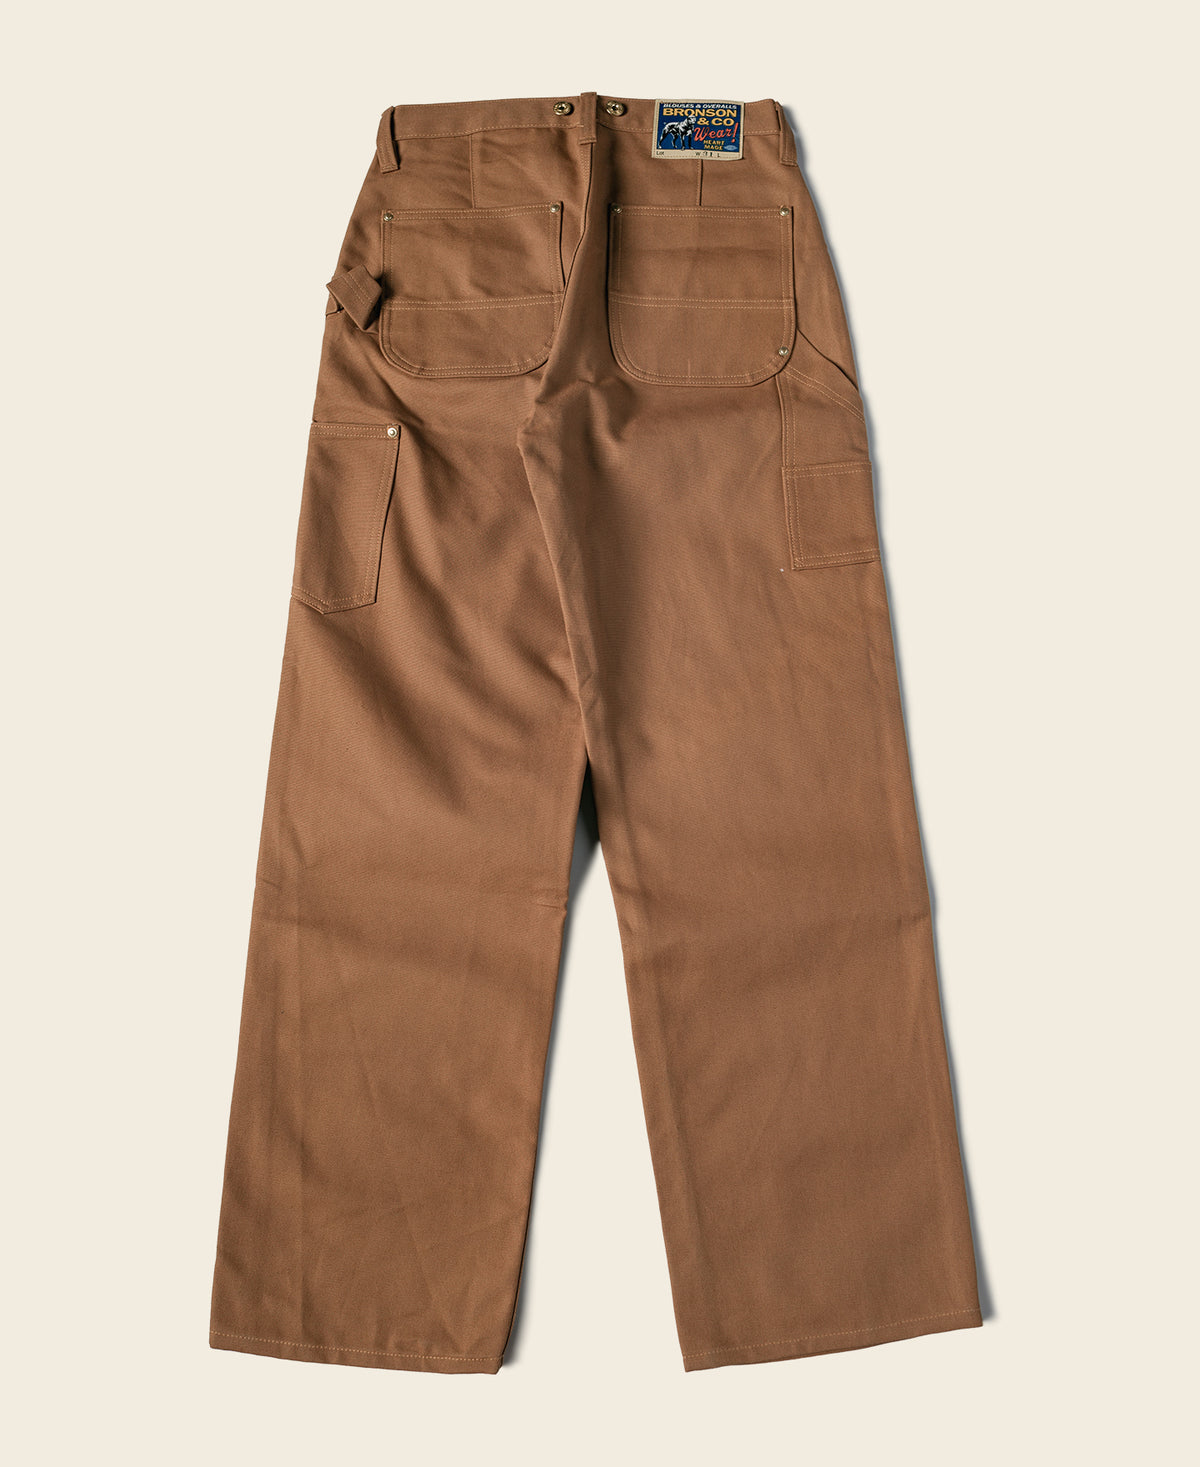 Bronson 1873 Duck Canvas Work Pants Vintage Workwear Trousers High Waist  Selvage | eBay